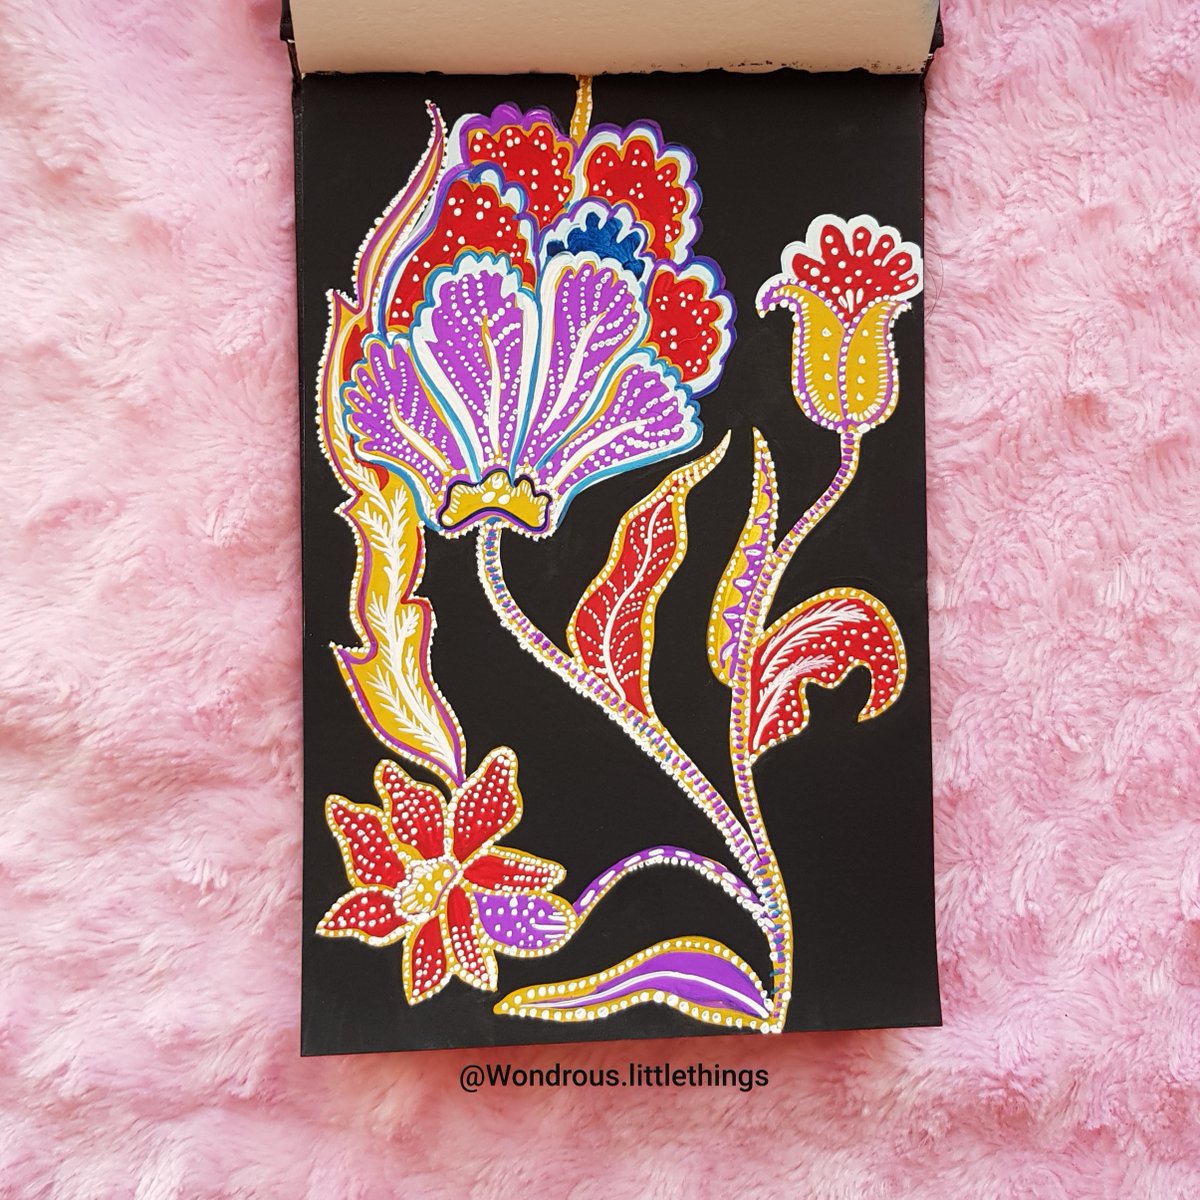 Inspired by Malaysian Batik 🌺
Learning🦋
•
#Batik #malaysianart #traditionalart #batikart #culturalart  #colorful #batikmalaysia #flowermotif #design #artanddesign #artwork #art #painting #gouache #experimentalart #detailedart #colortheory #gouacheonpaper #modernisedart